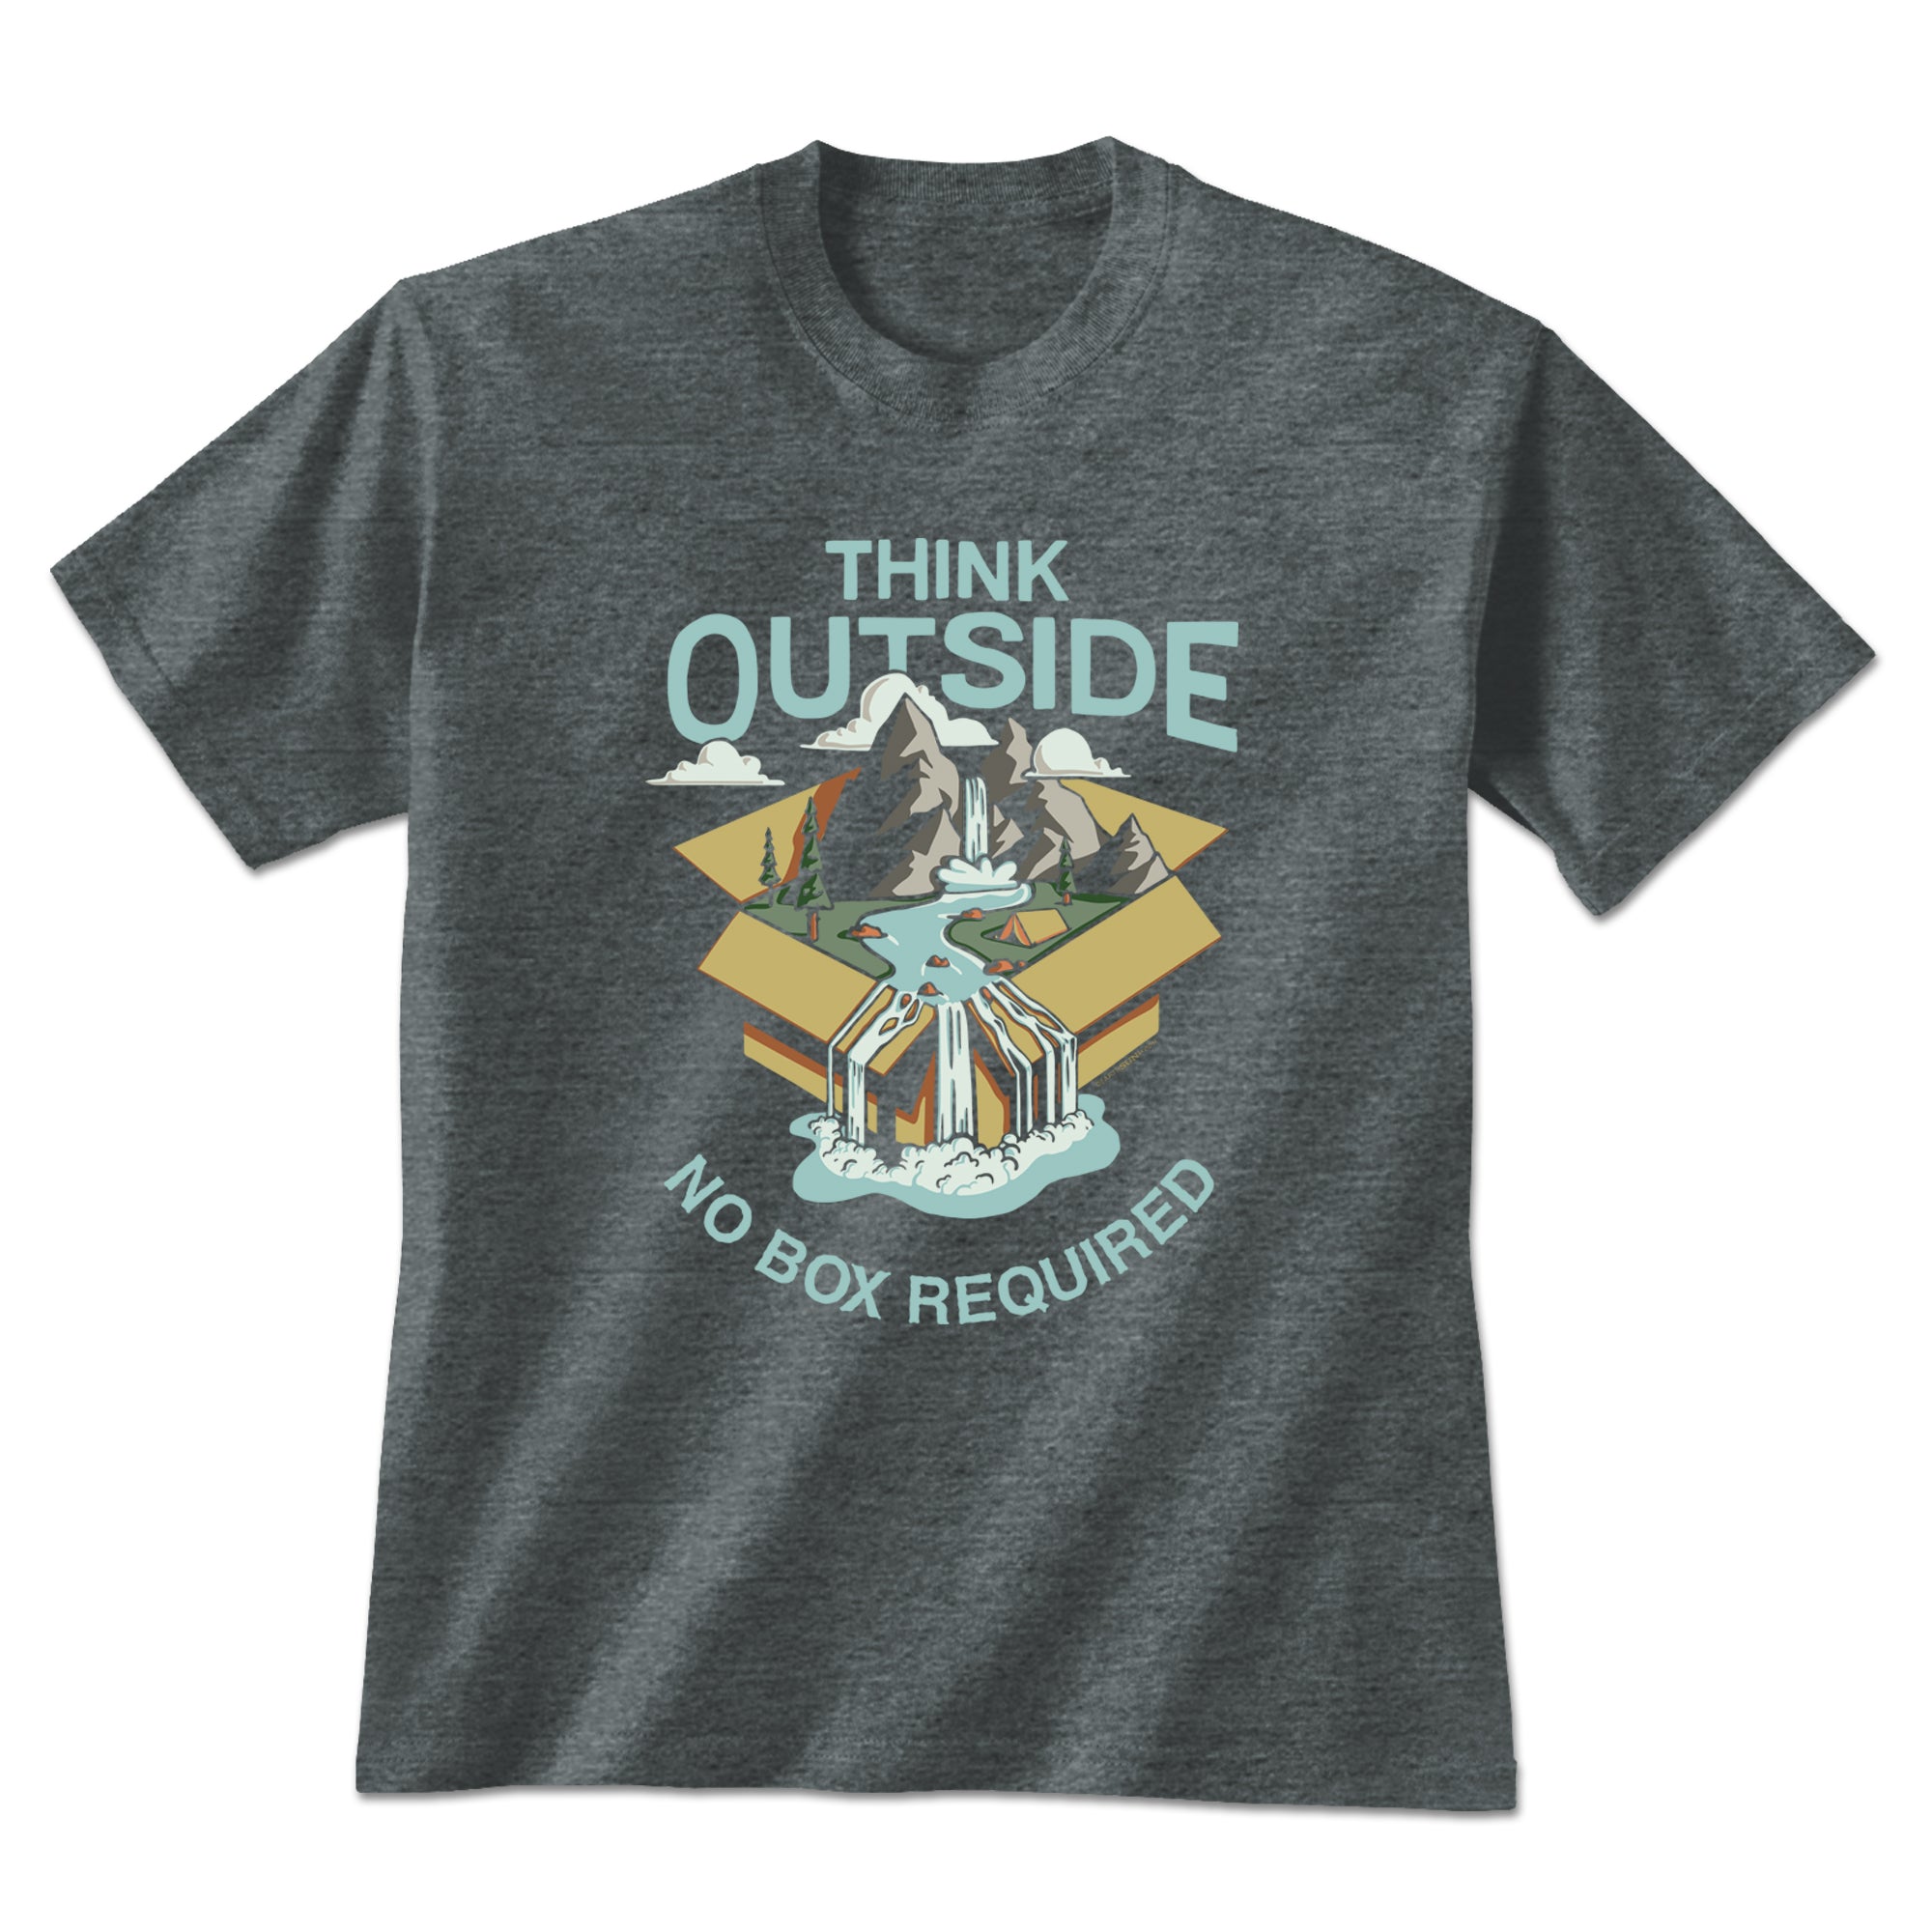 Think Outside - Wild T-Shirt - Dark Heather - Large